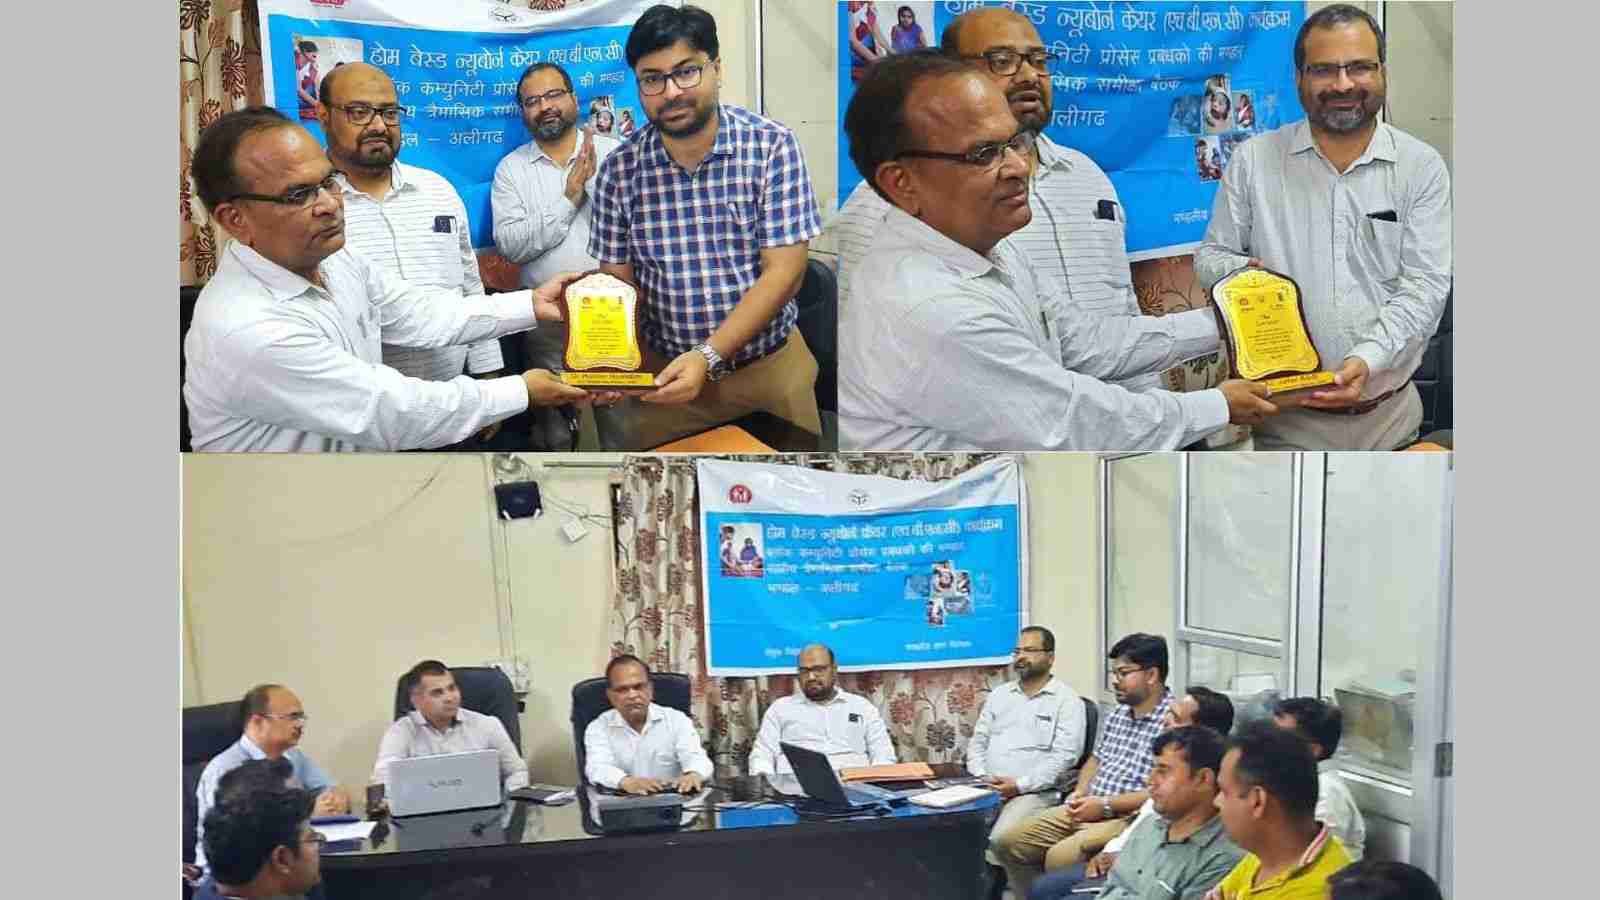 AMU doctors receive award for vaccine rollout in Uttar Pradesh